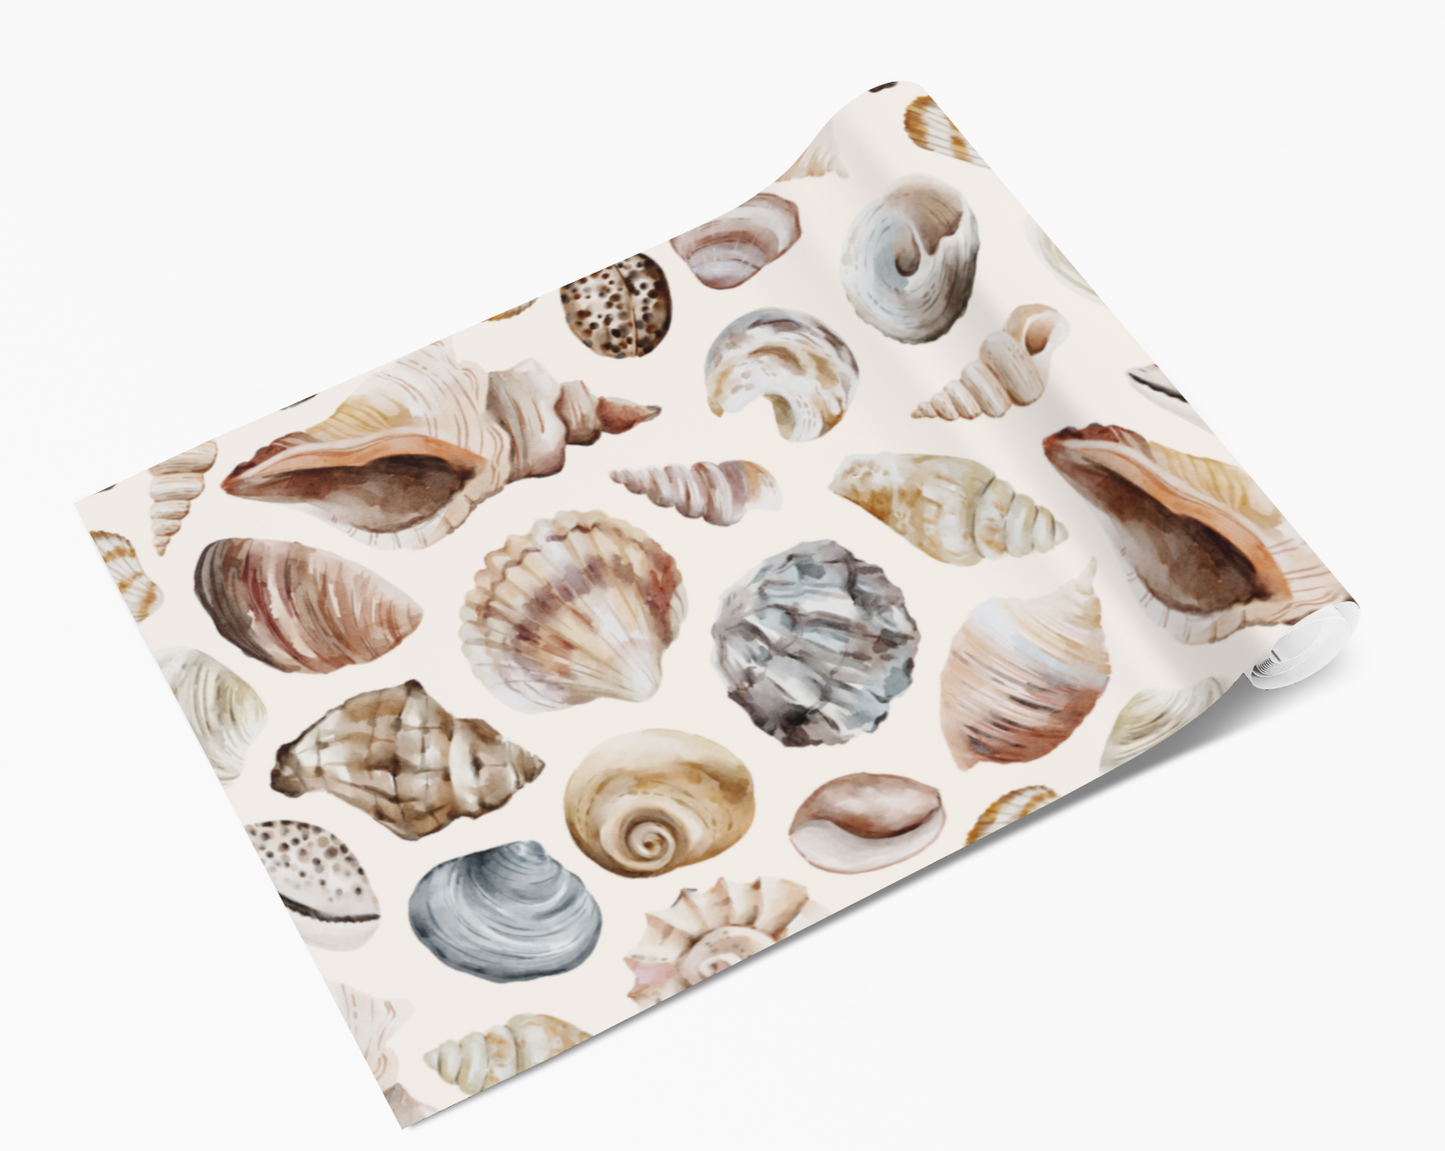 Sea Shells Conch Clam Mussel Self Adhesive Vinyl